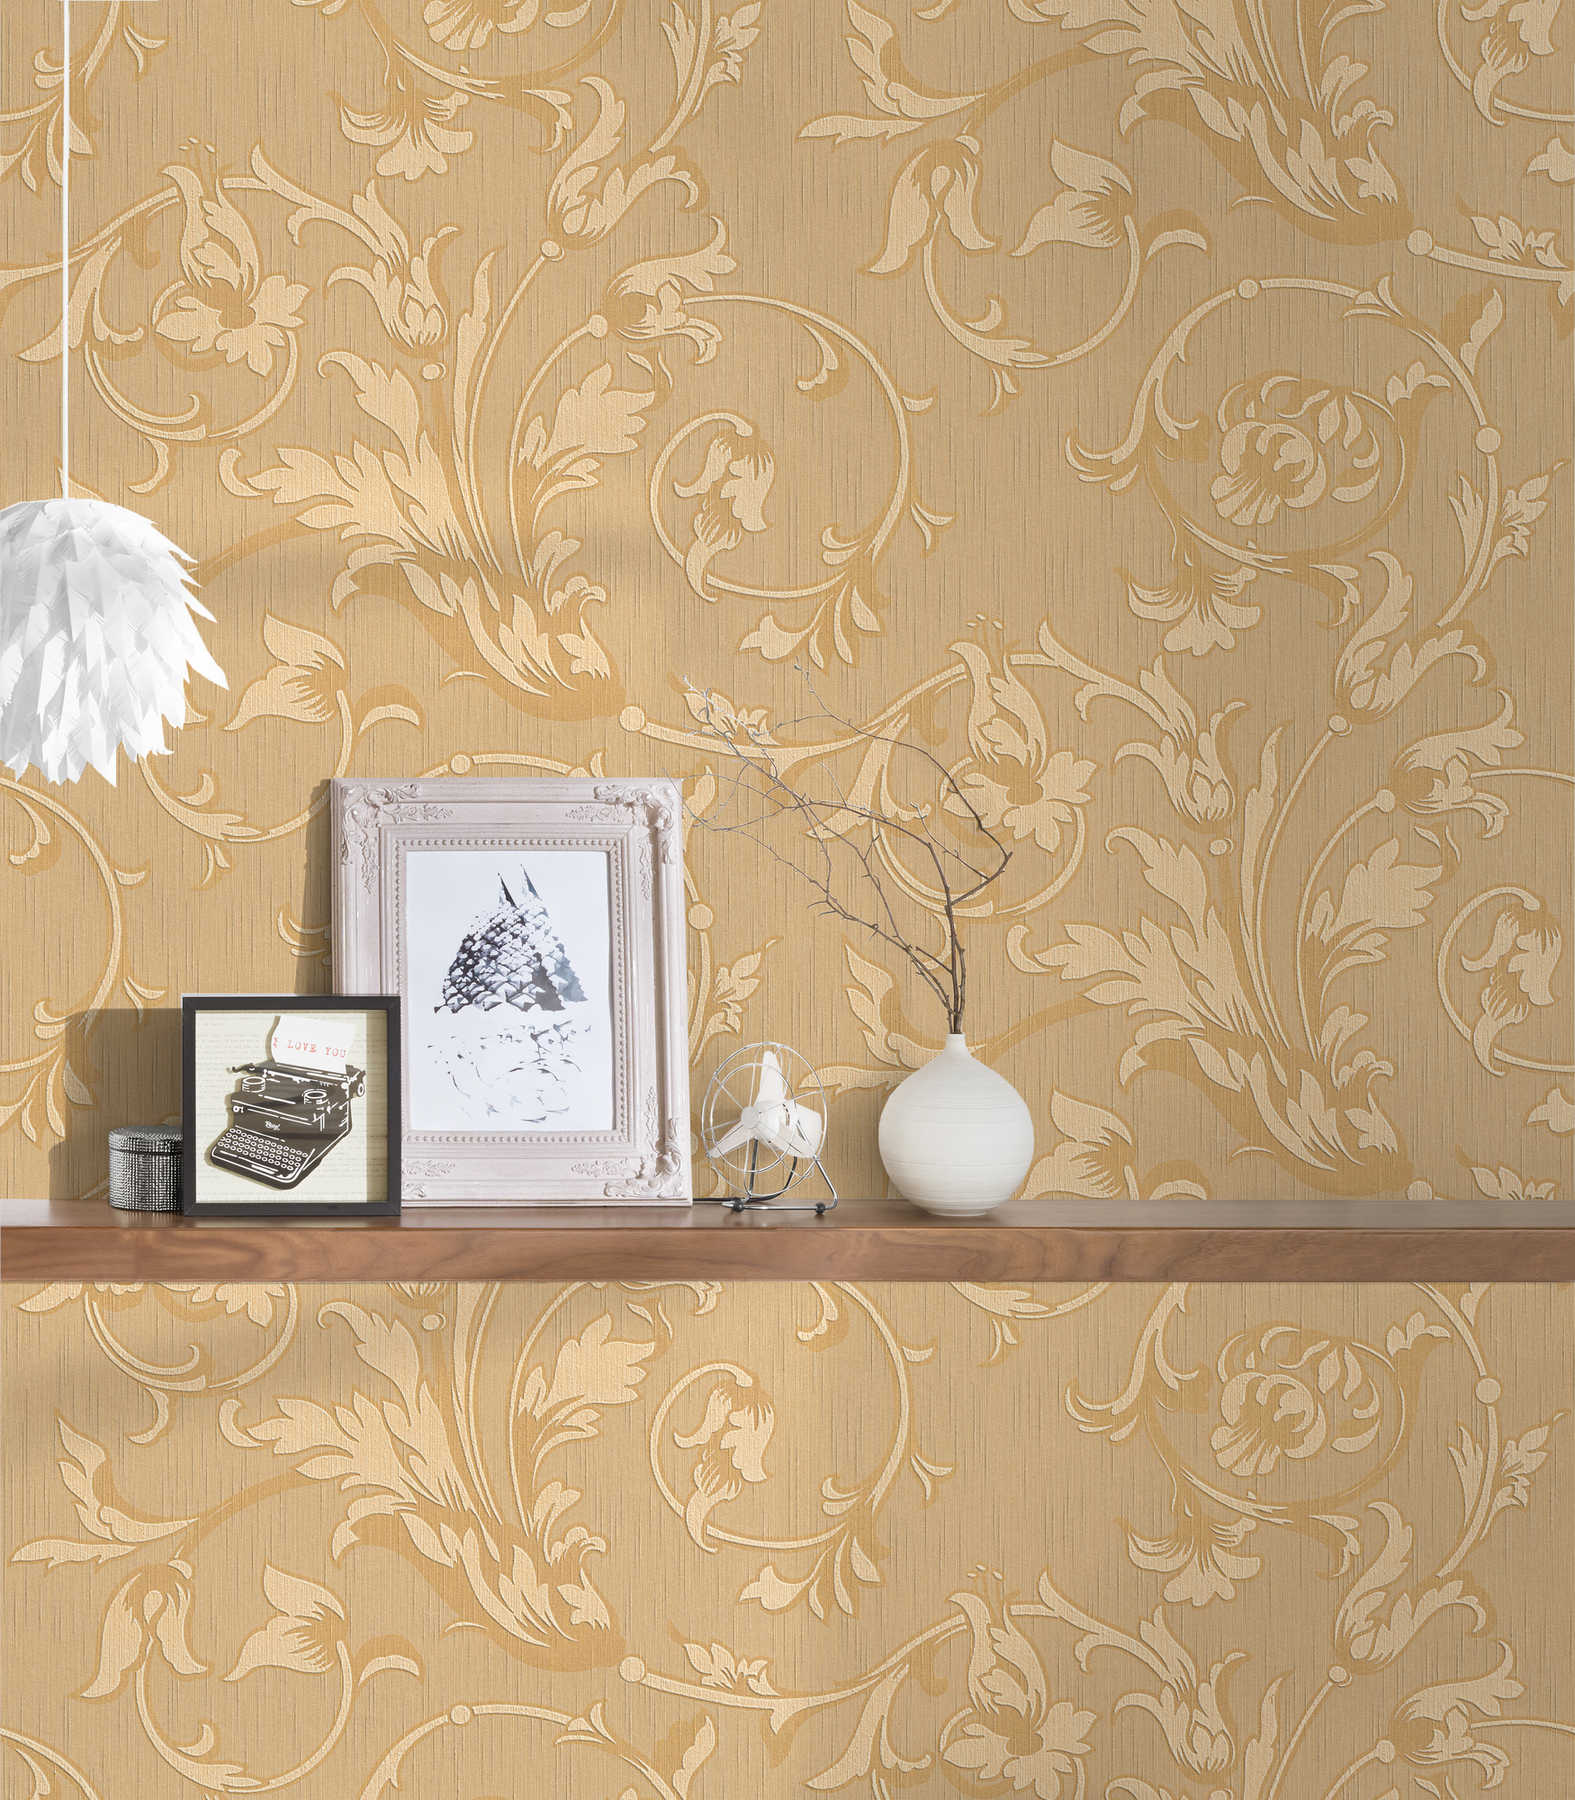             Baroque wallpaper with ornaments silk textile look - orange, beige
        